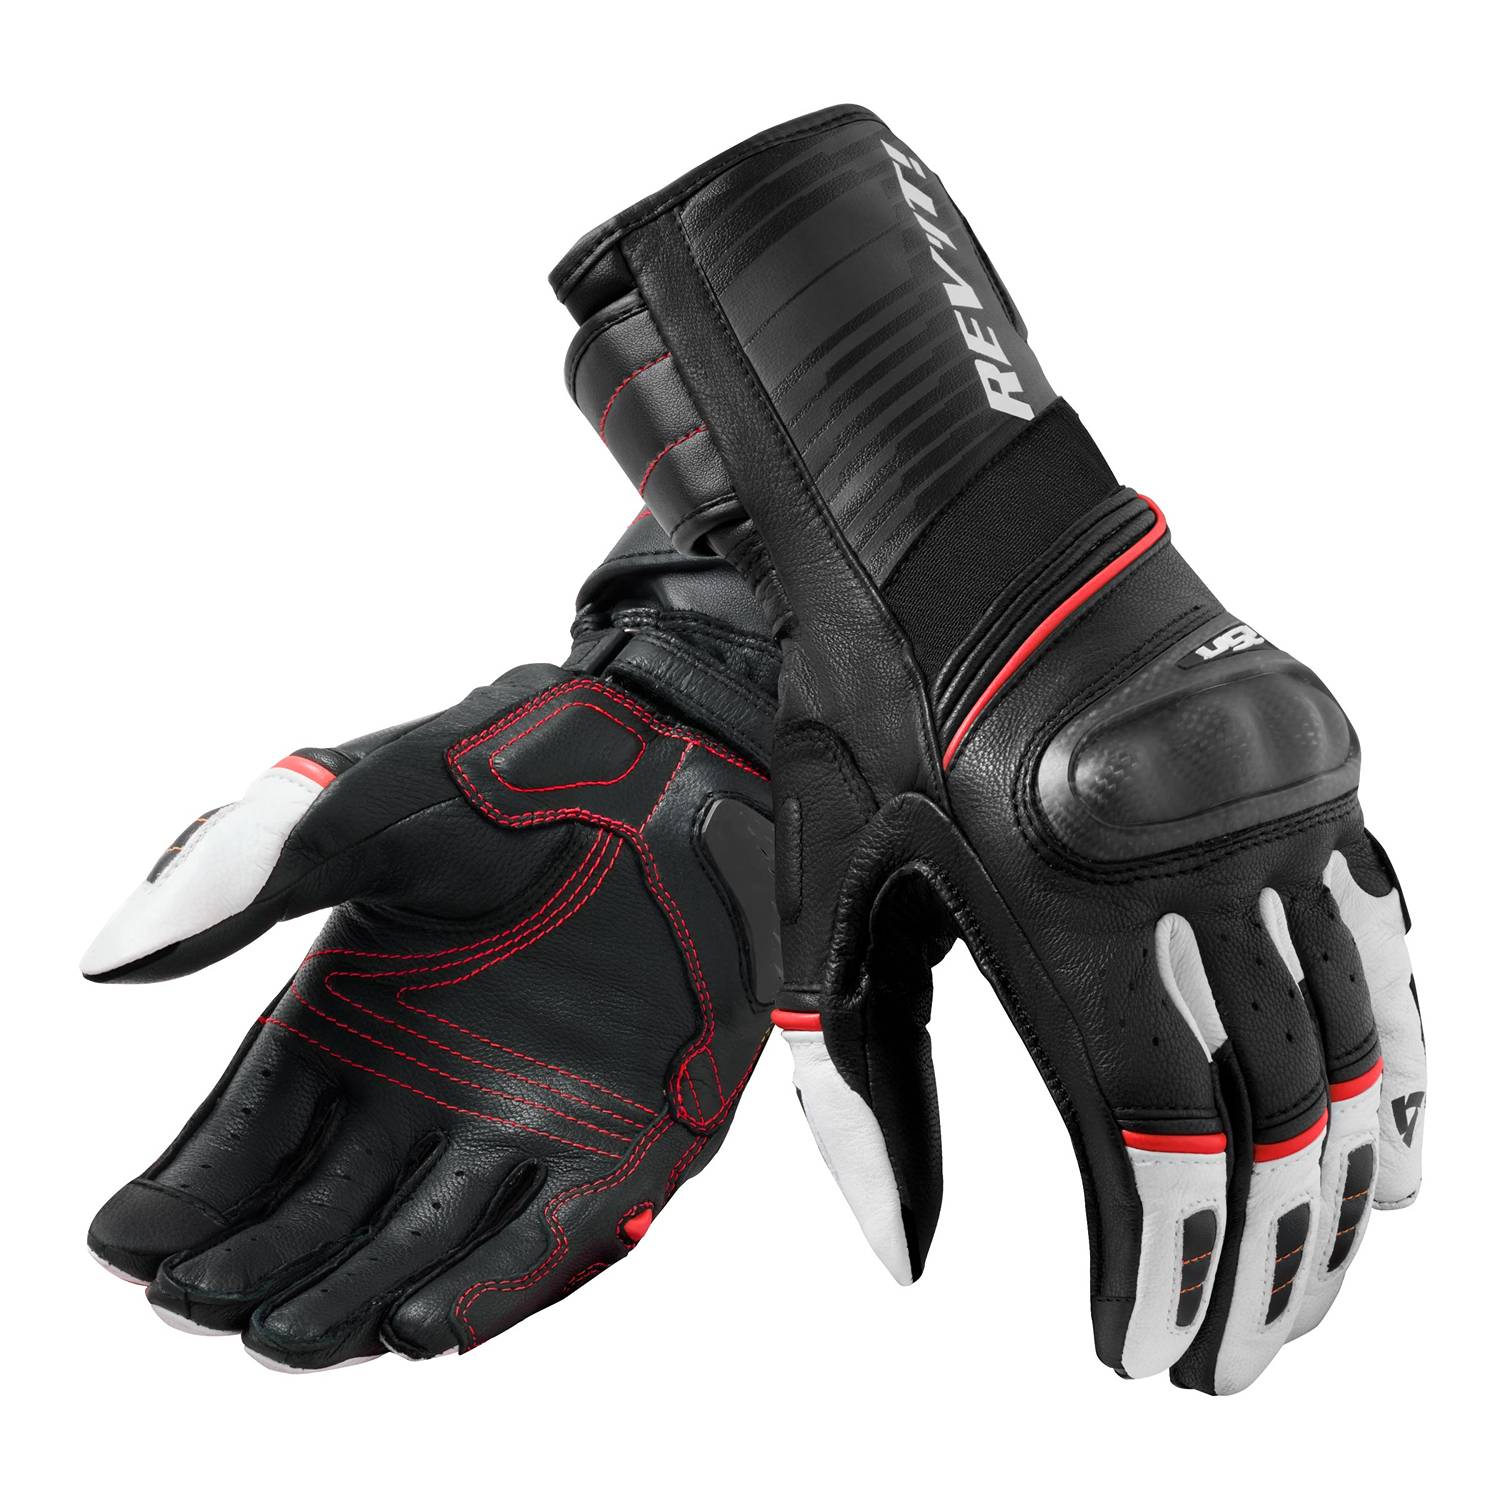 Image of REV'IT! RSR 4 Gloves Black White Size S ID 8700001306737